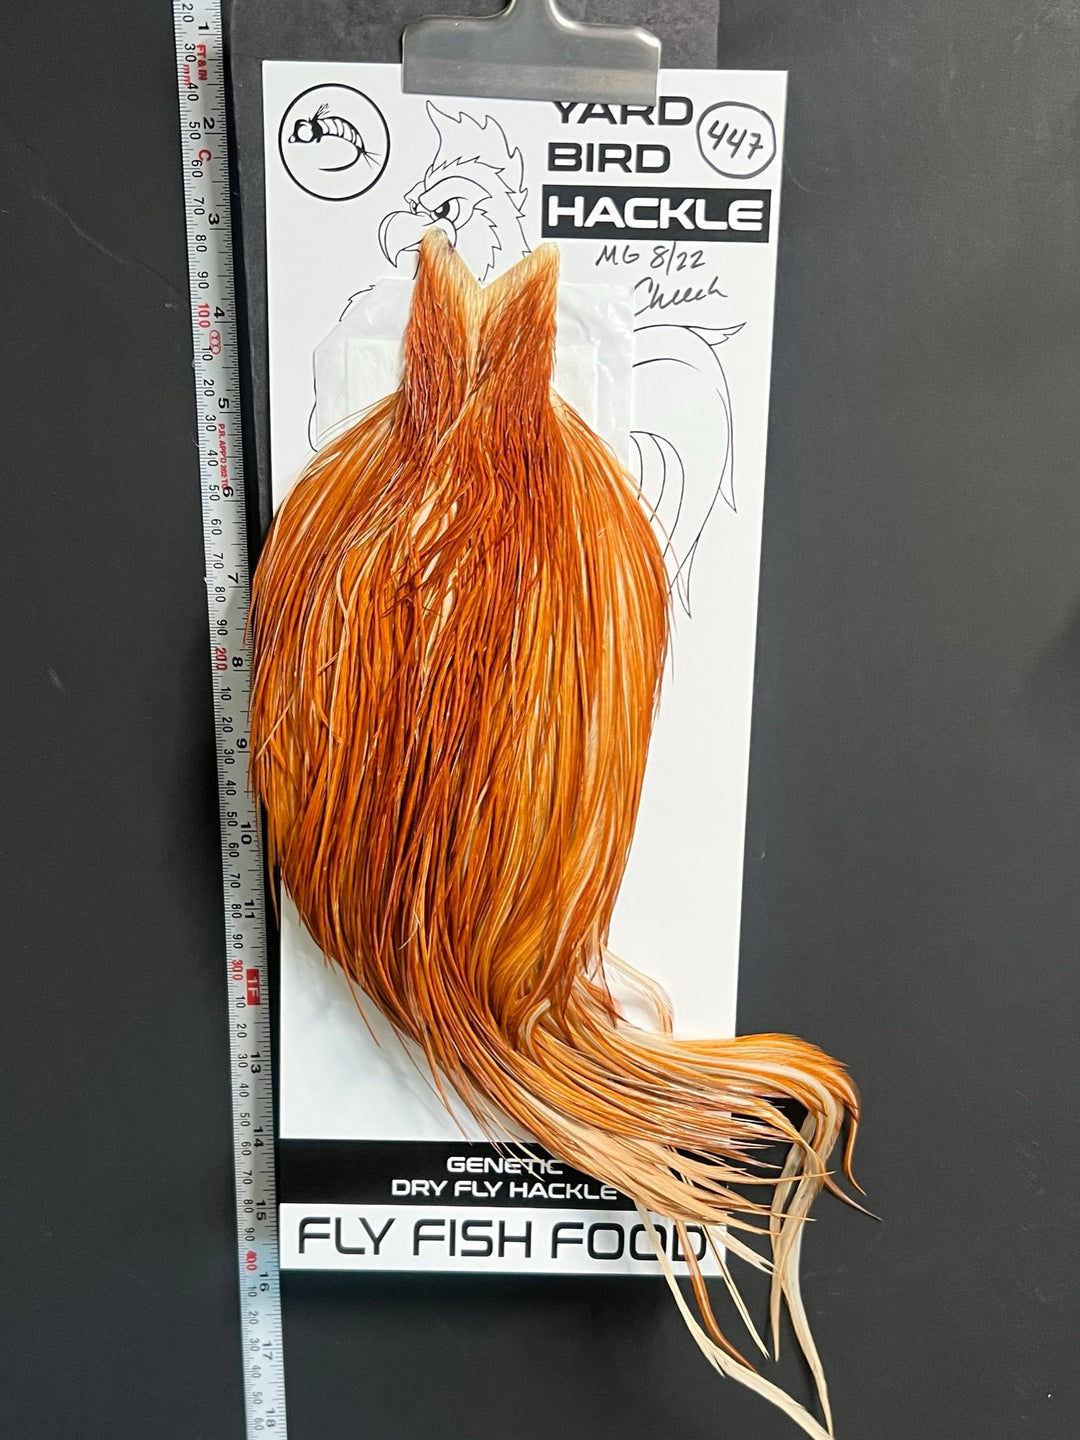 Flash Sale Hackle 447 - Yard Bird Cape  - Medium Ginger (sizes 8-22)